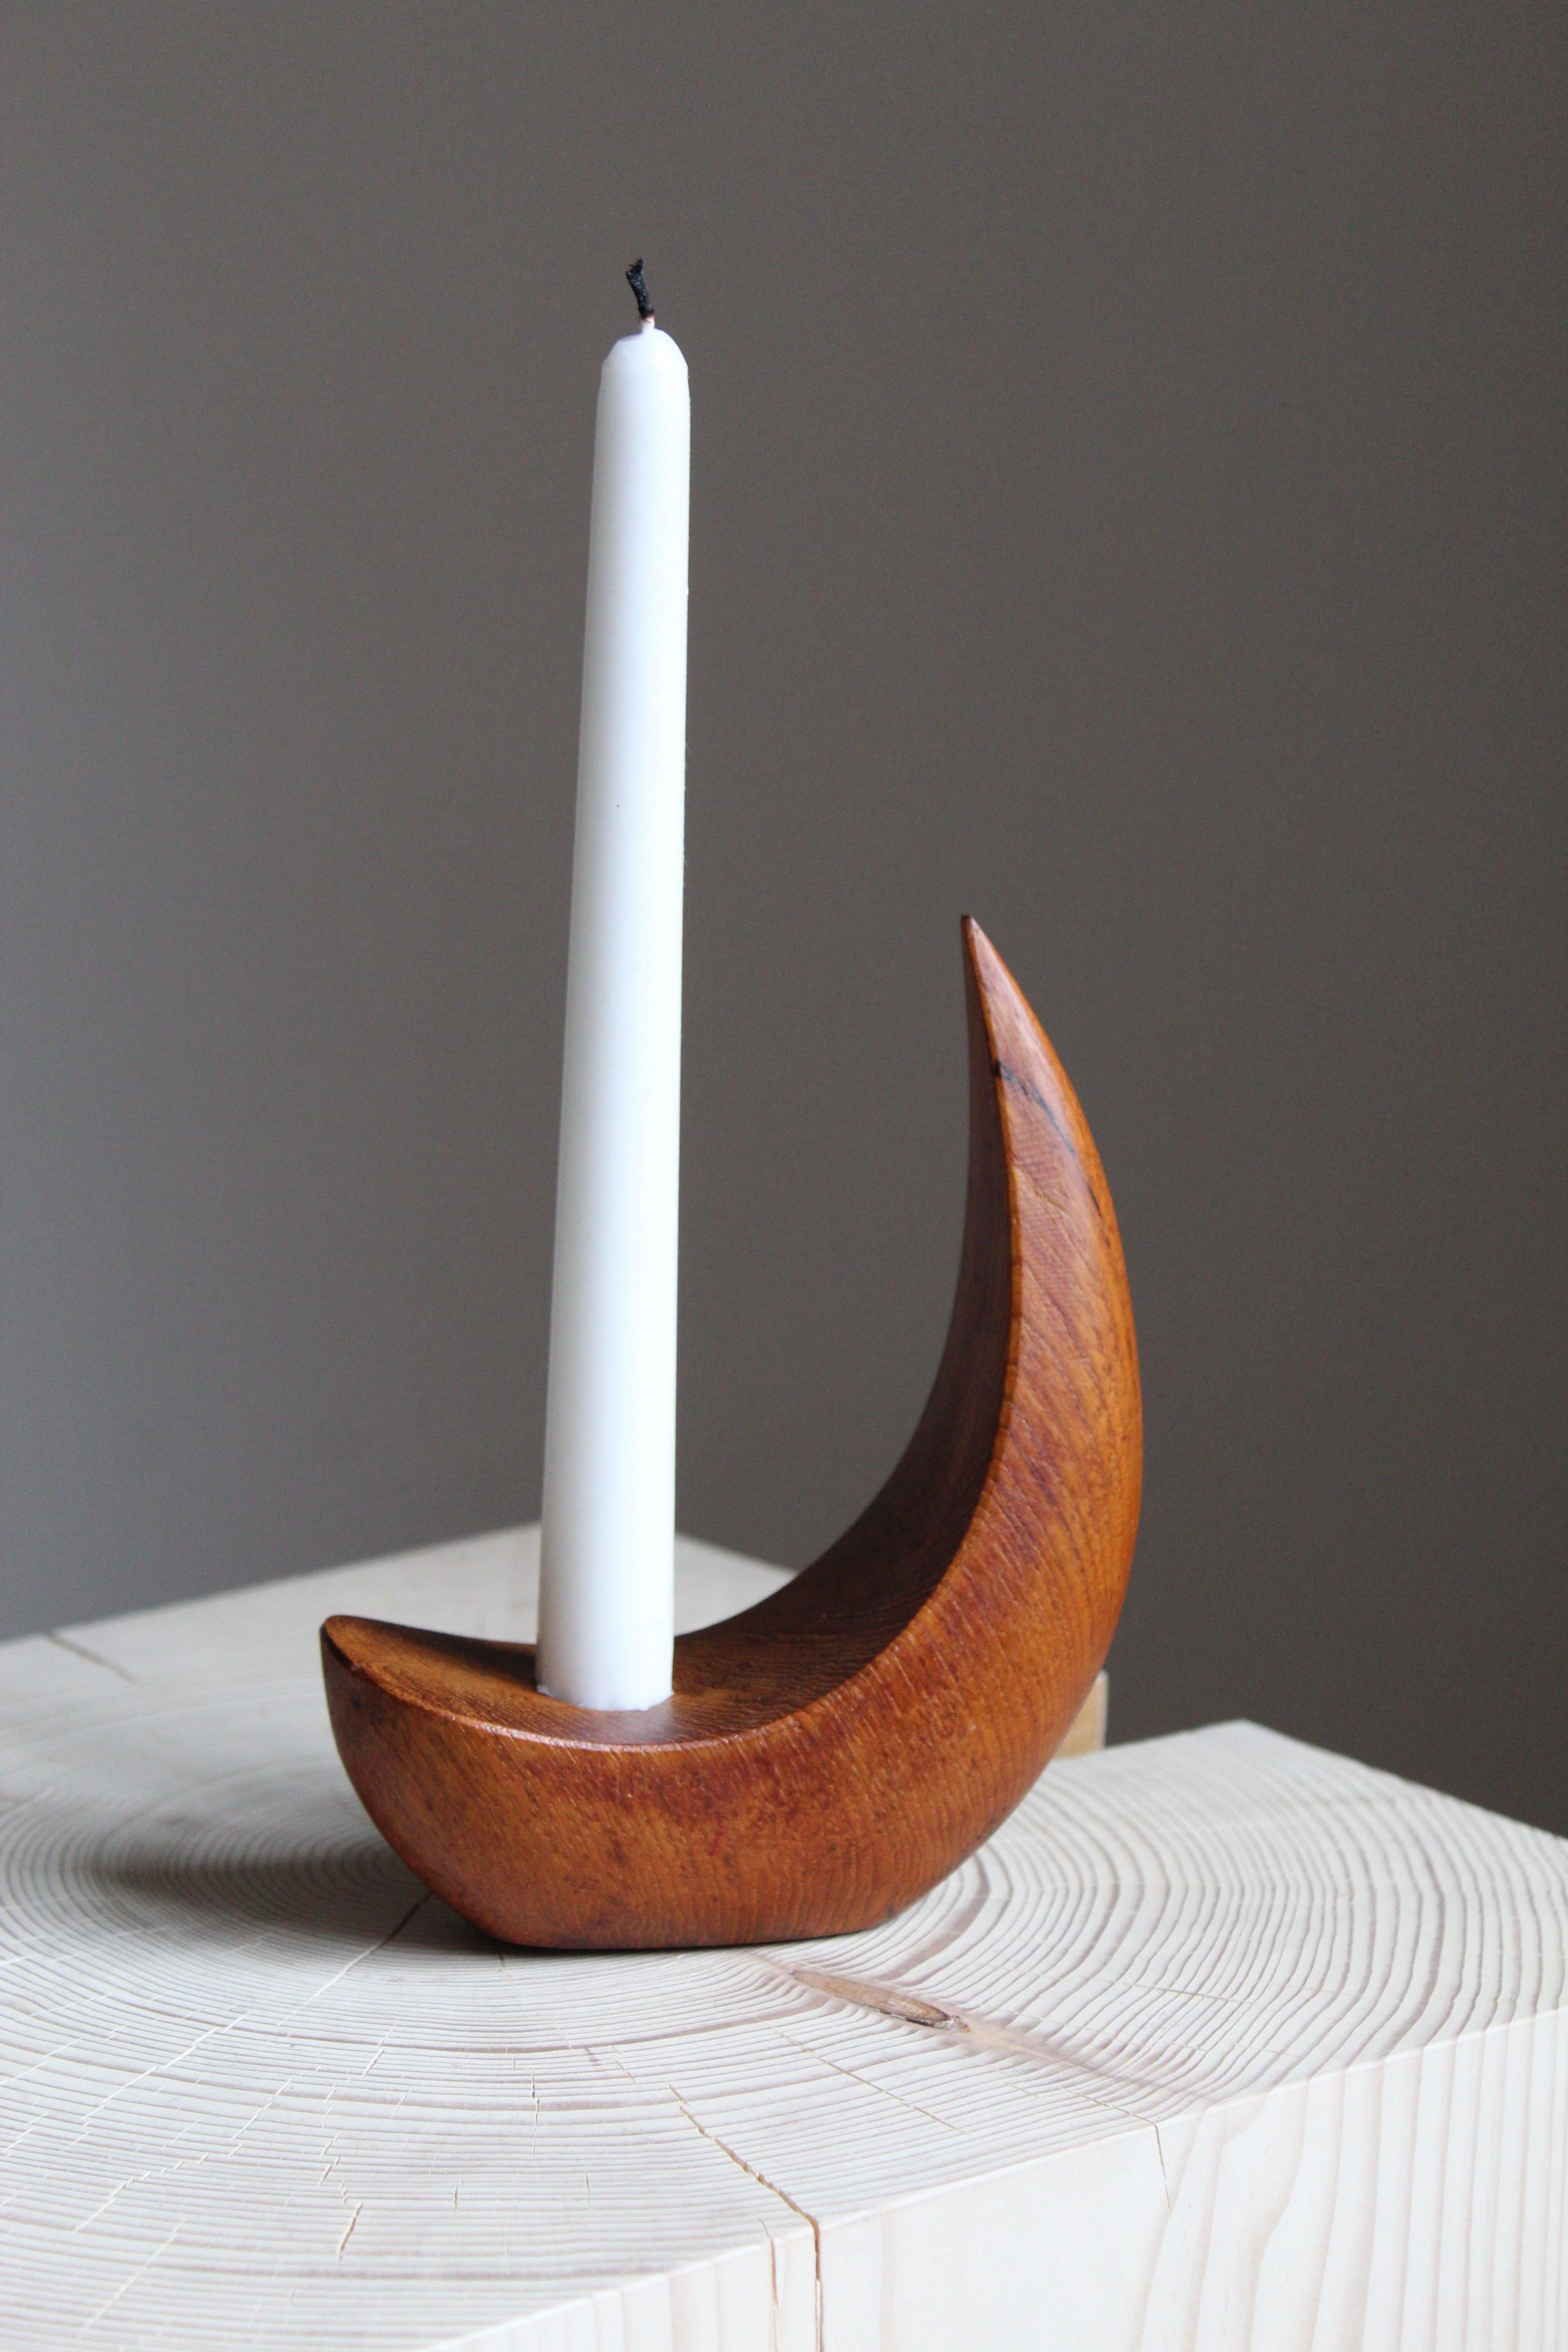 A candlestick / sculpture by Stig Sandberg. Handmade in his studio. 

Other designers of the period include Finn Juhl, Hans Wegner, Kaare Klint, and Alvar Aalto.